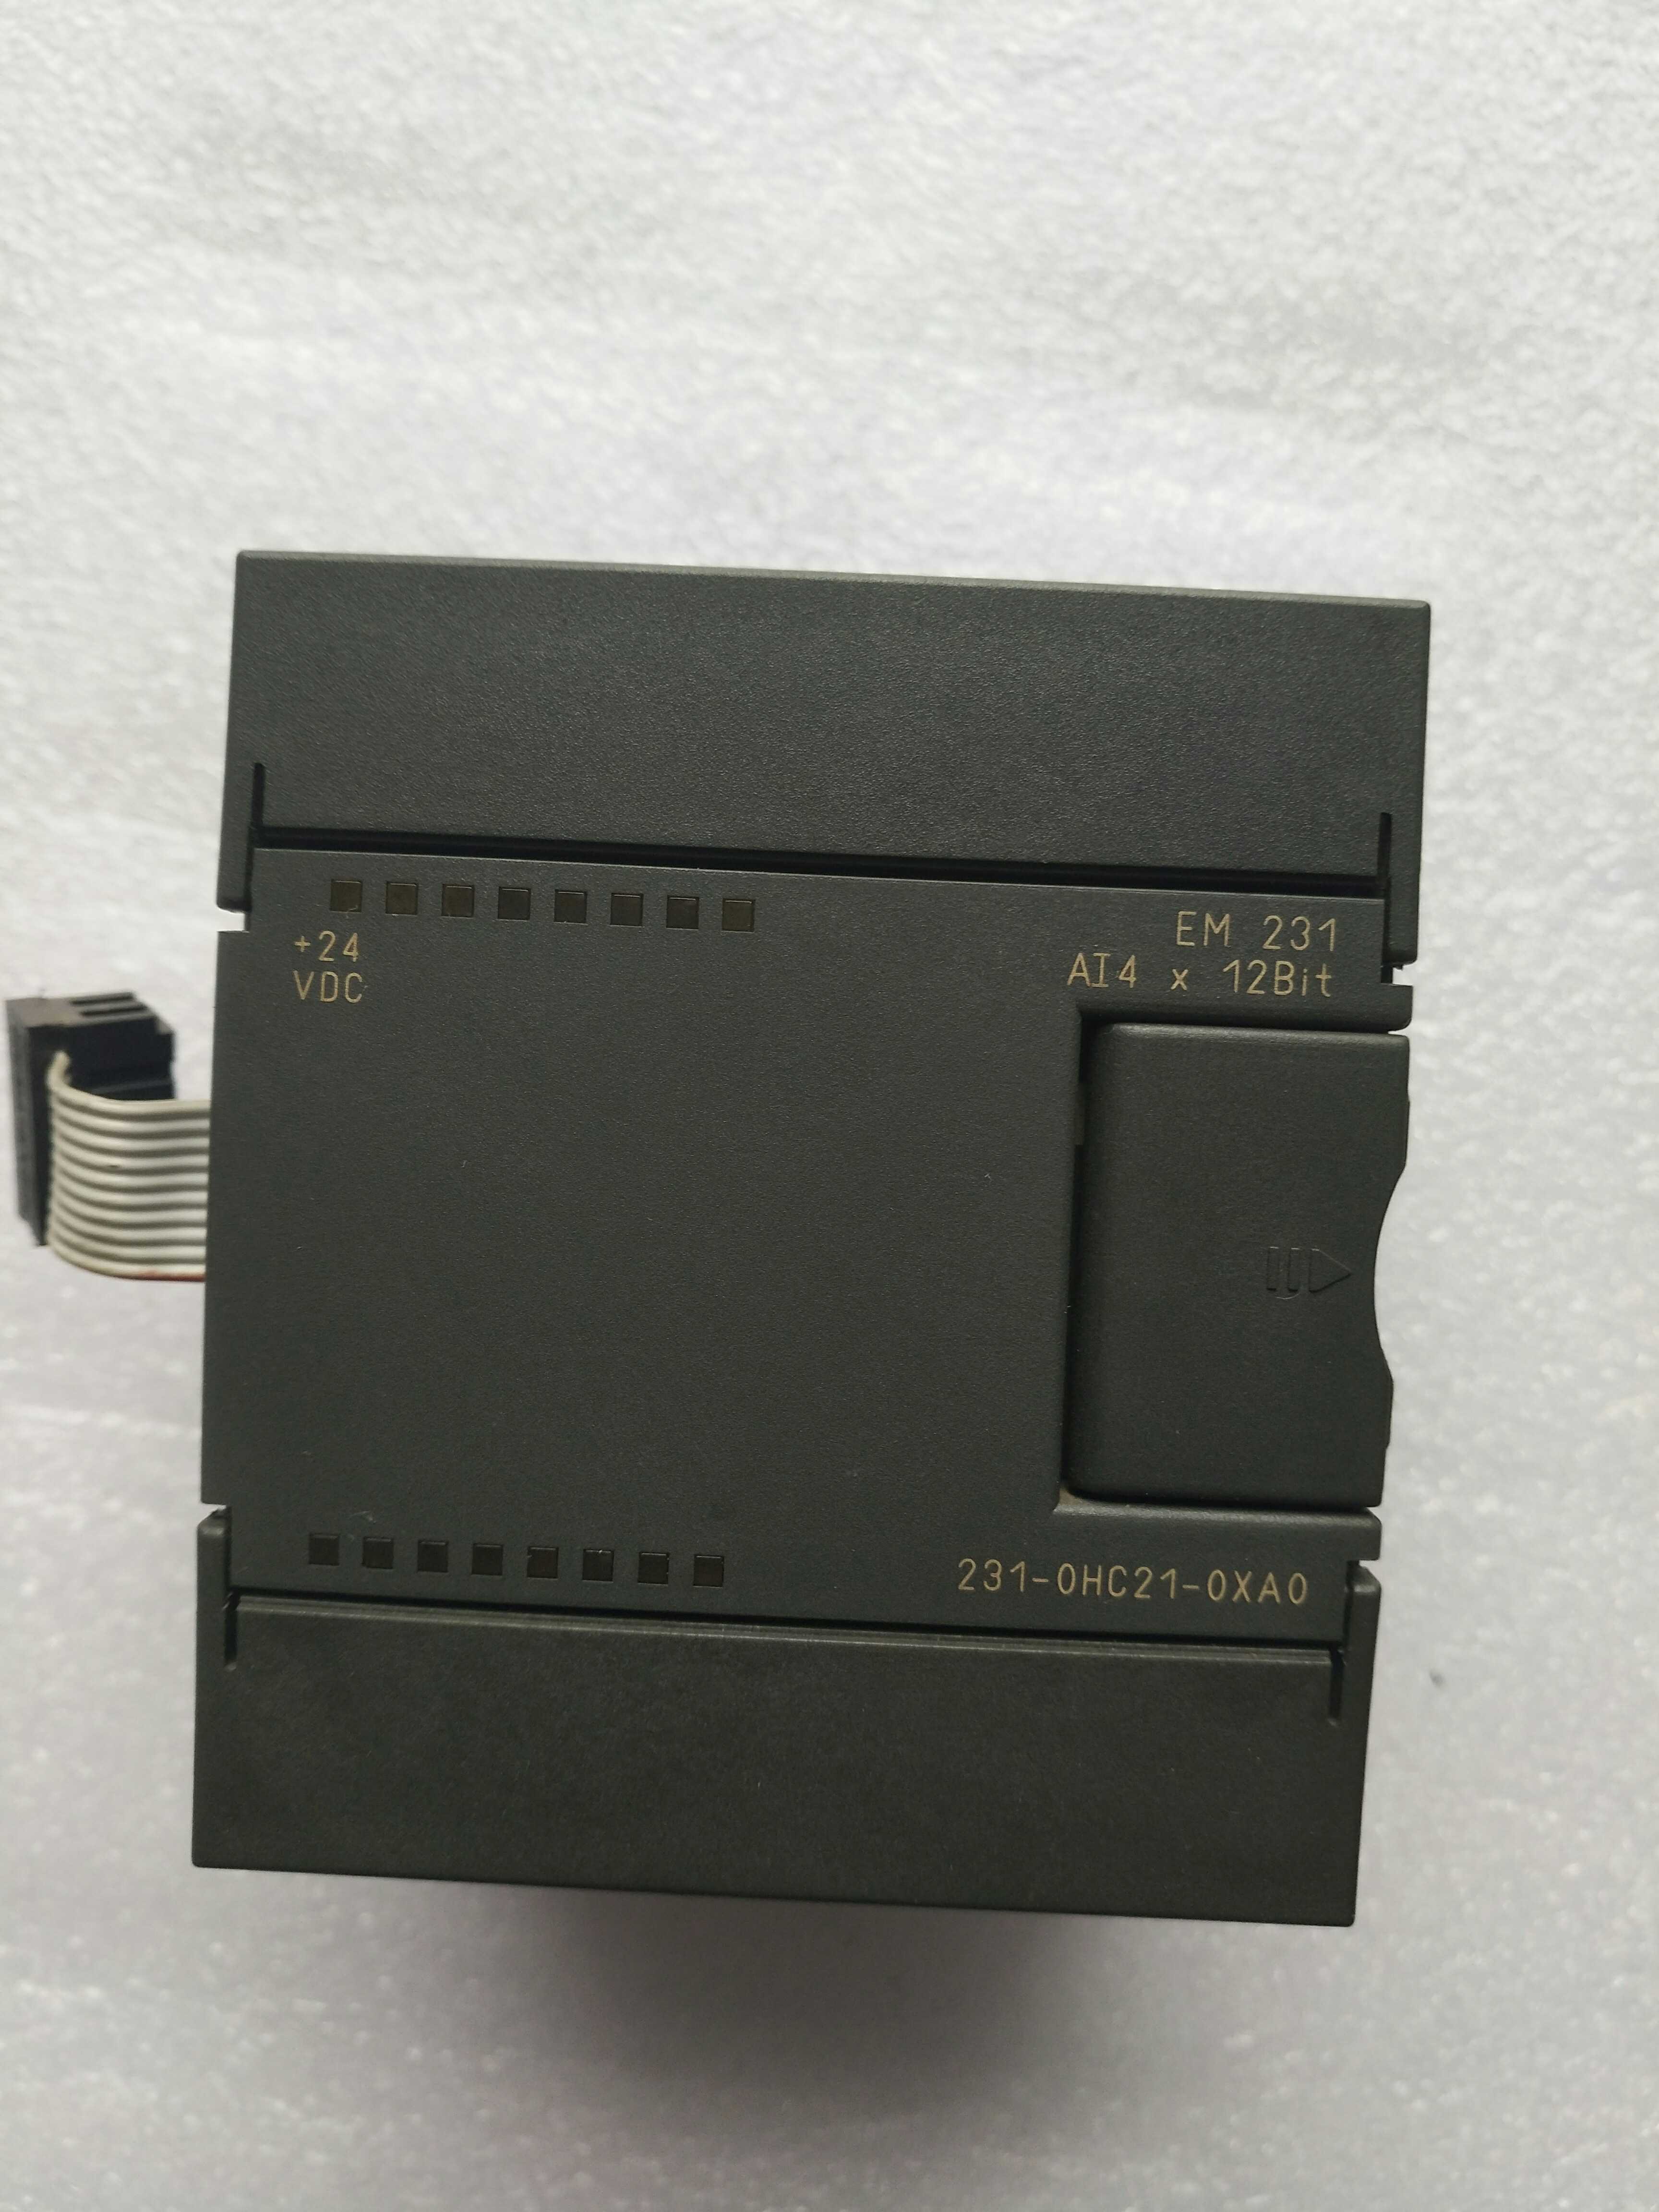 Imported Siemens 4-way analog input module EM231-0HC21-0XA0 AI4*12Bit American production